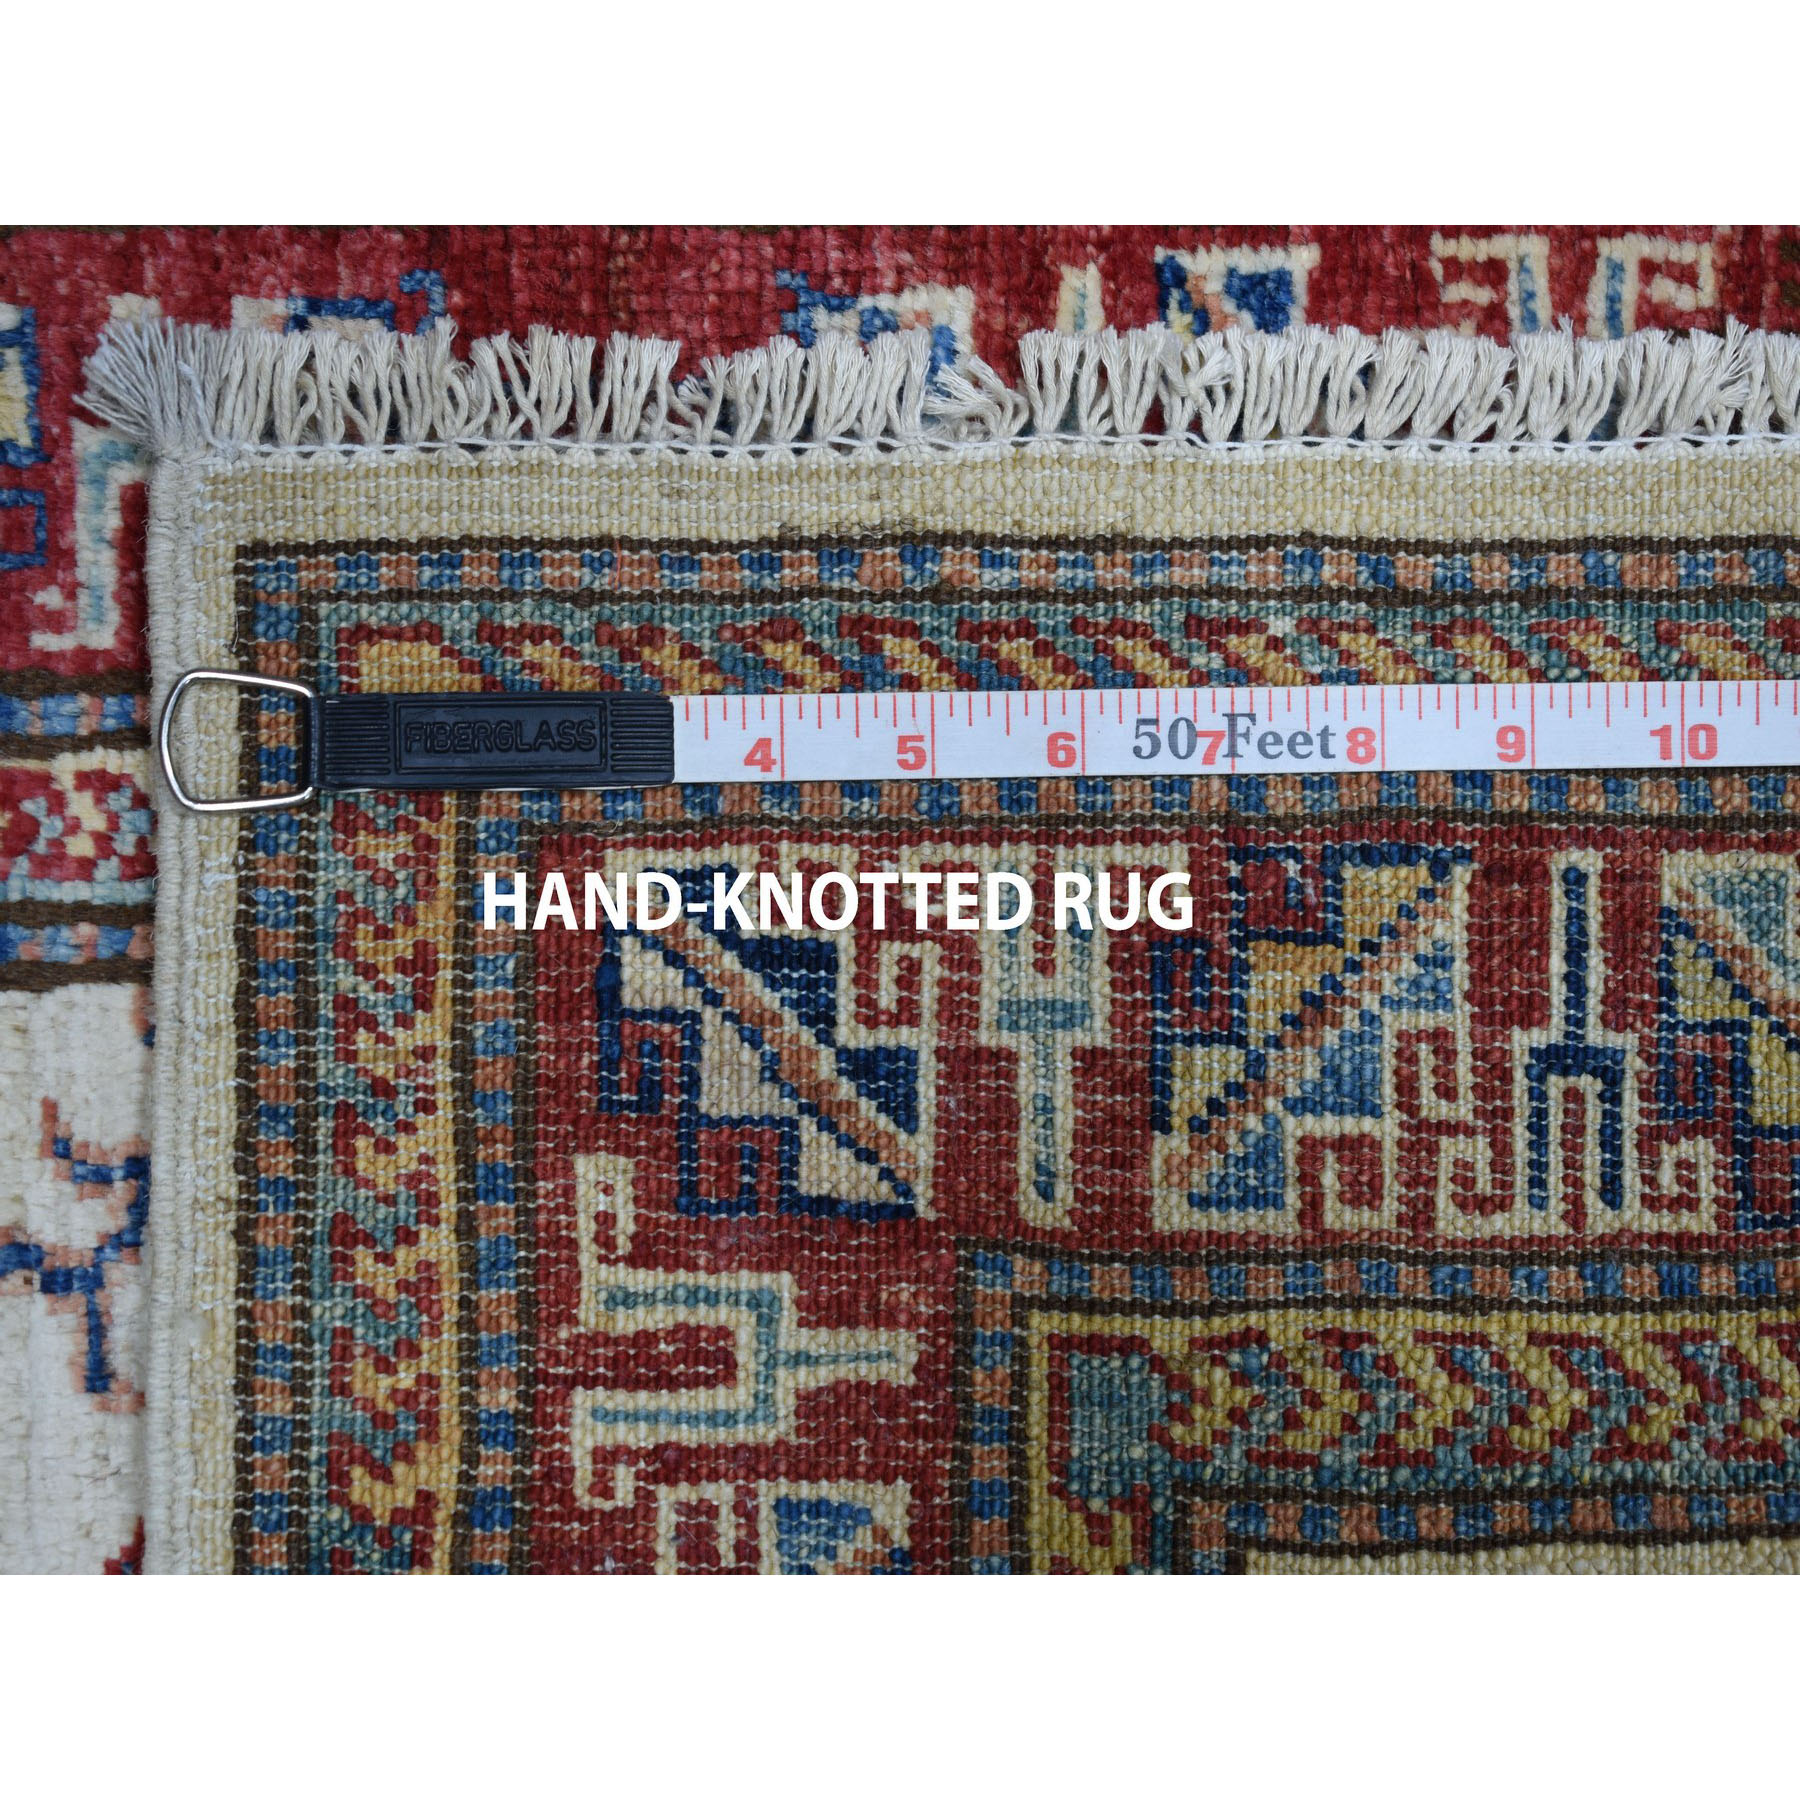 2-1 x3- Ivory Super Kazak Pure Wool Geometric Design Hand-Knotted Oriental Rug 